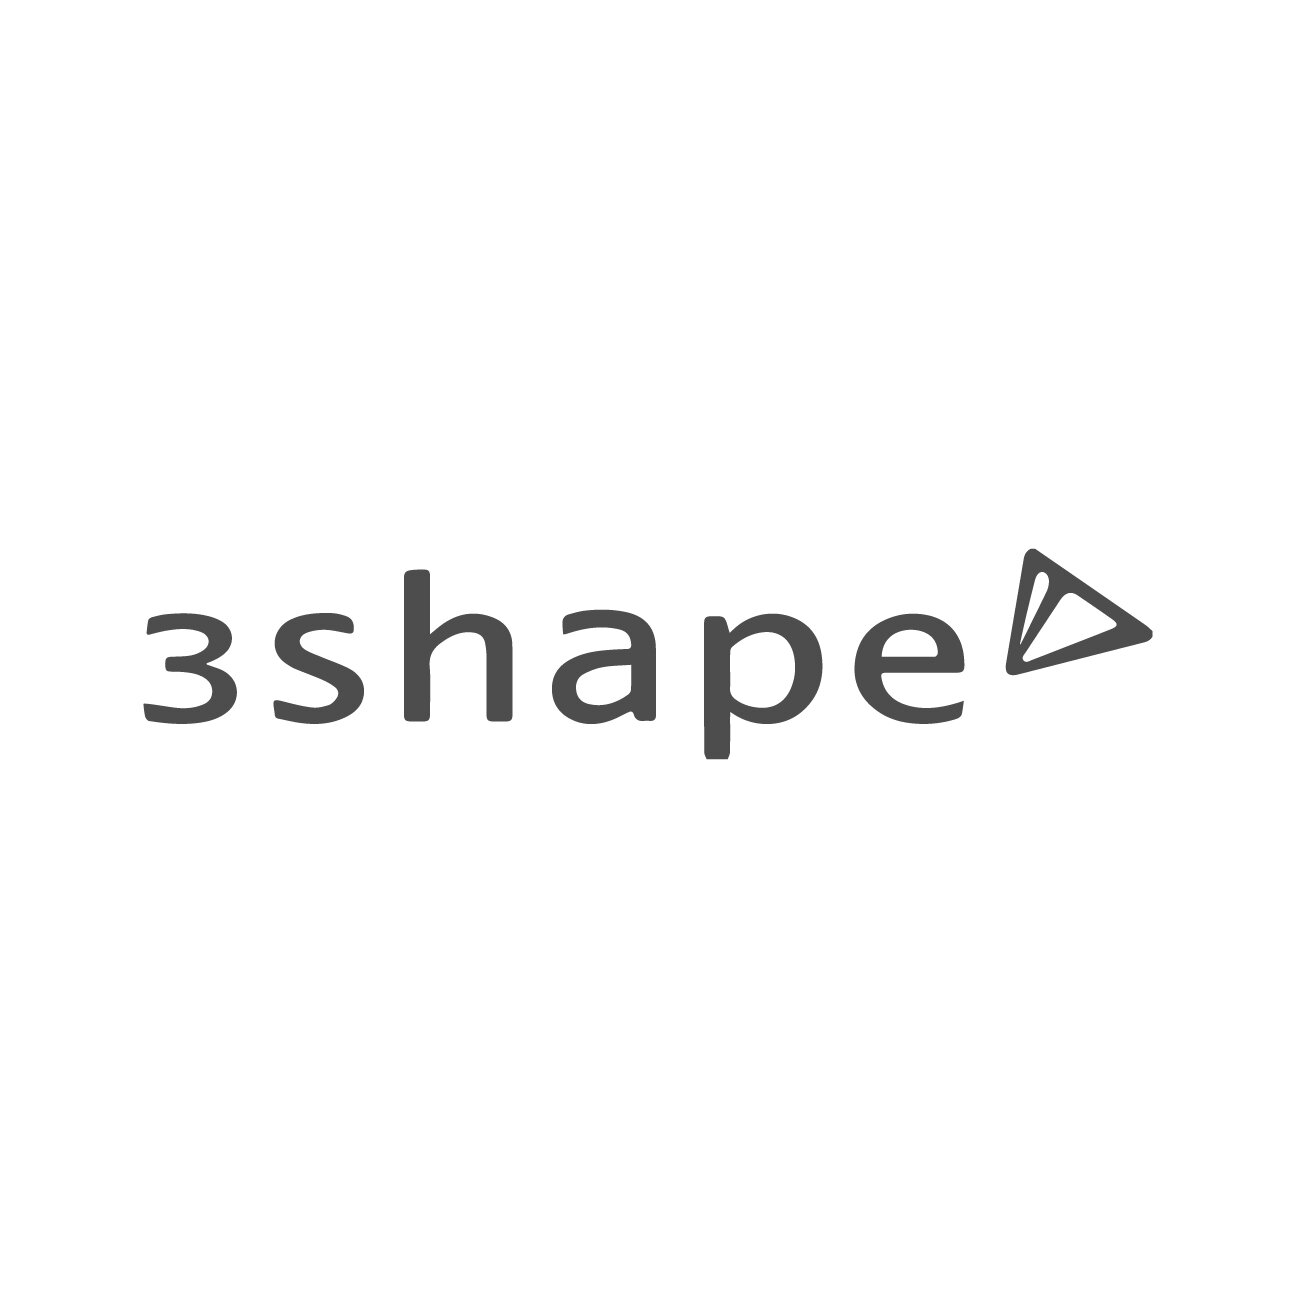 3shape_logo@3x-100.jpg